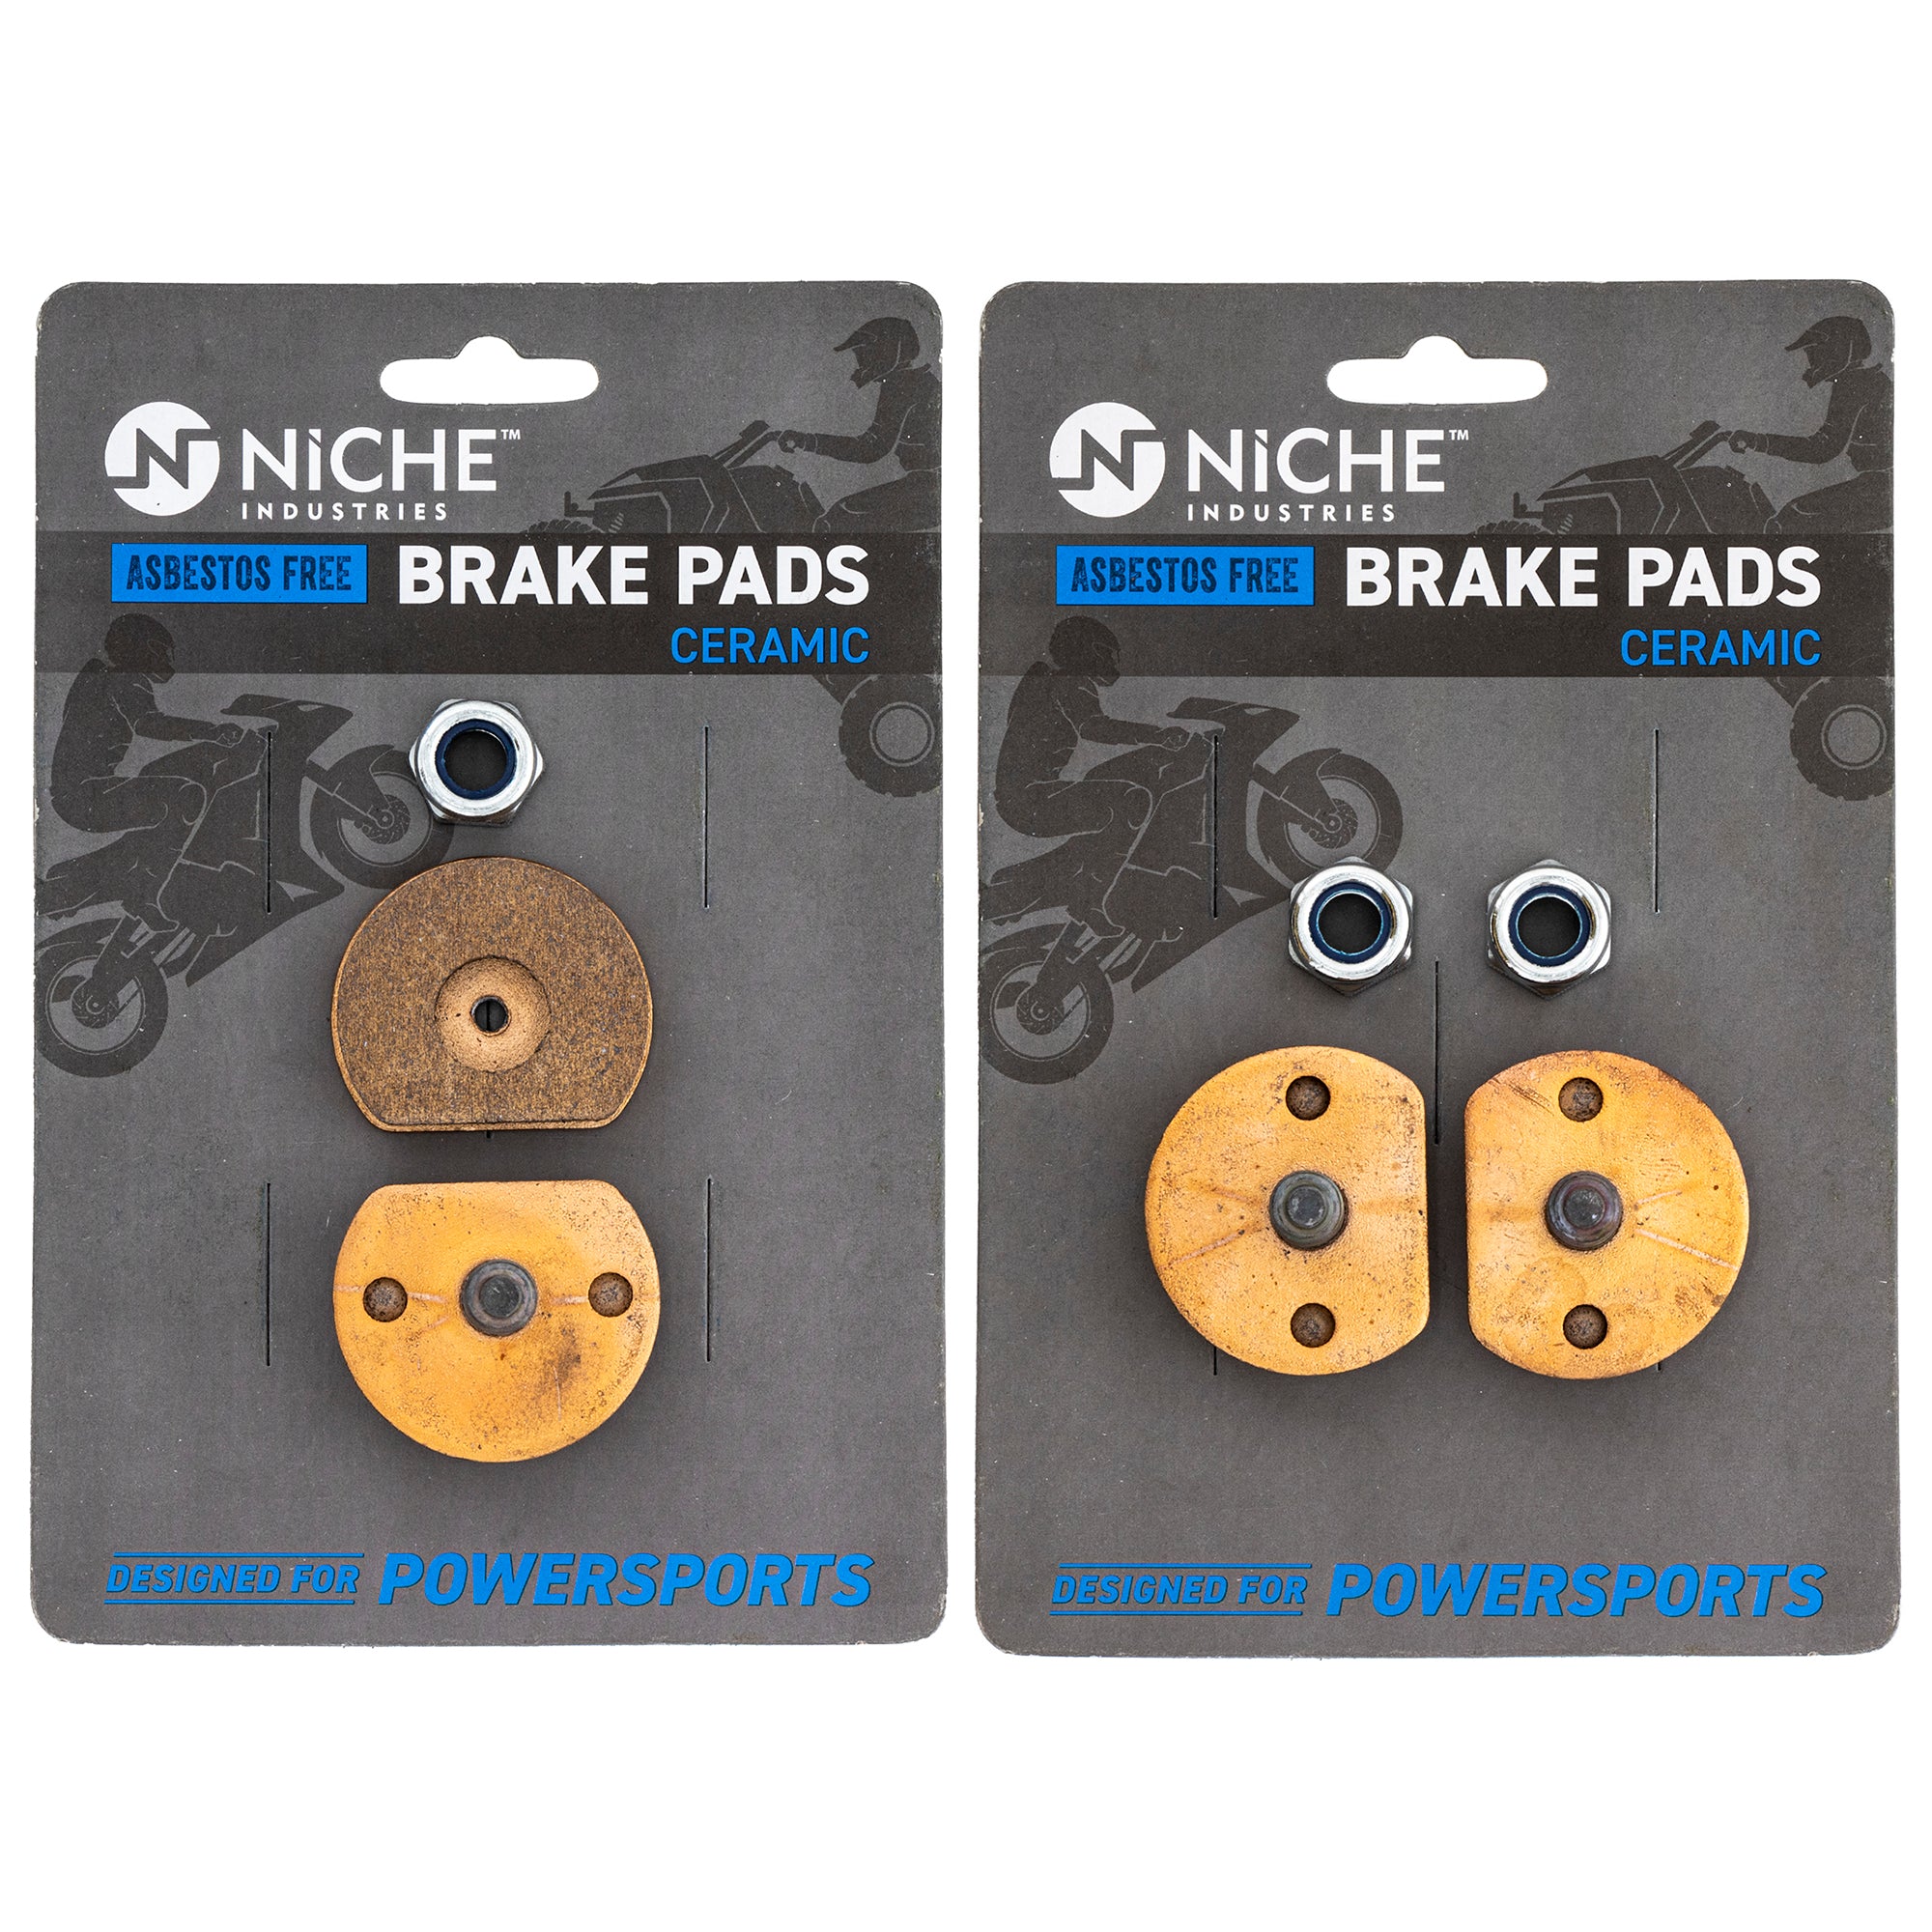 Ceramic Brake Pad Kit for BRP Can-Am Ski-Doo Sea-Doo Tundra 700 860700700 860700100 860 NICHE MK1002877